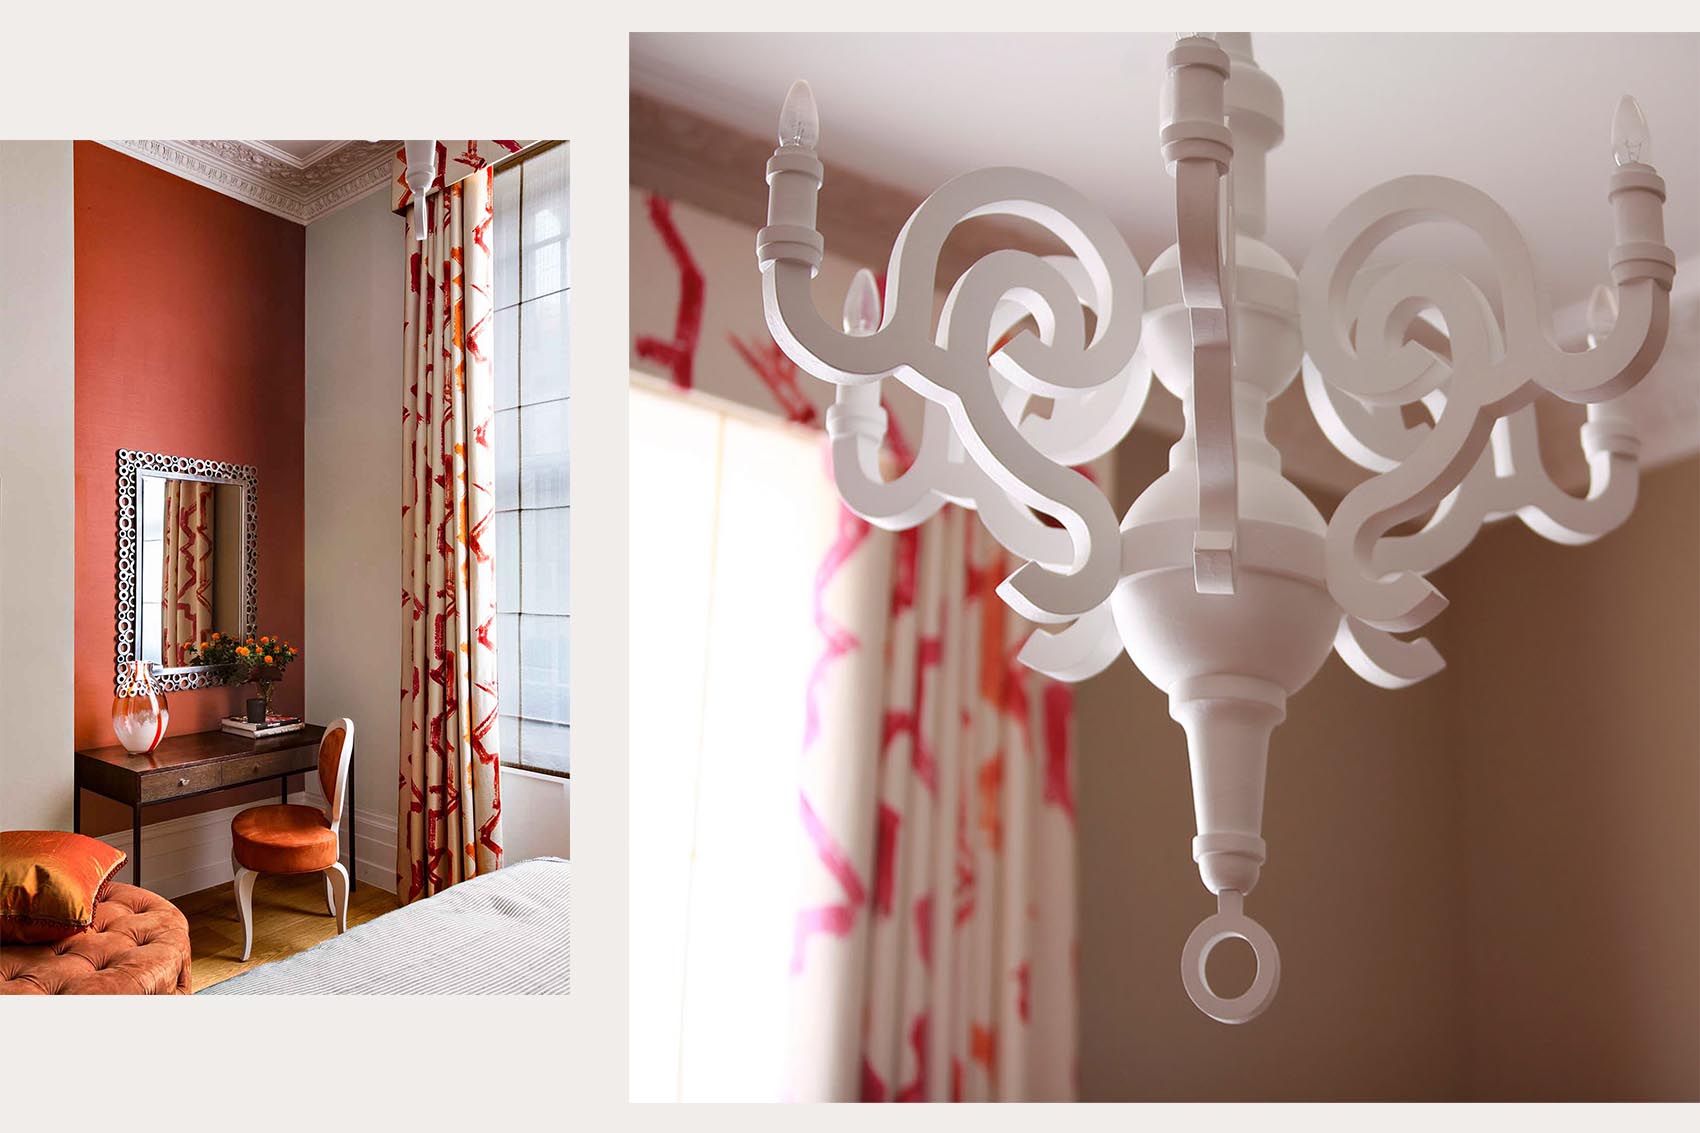 Guest bedroom design, white and orange accents, Moooi paper chandelier, orange deep button pouf